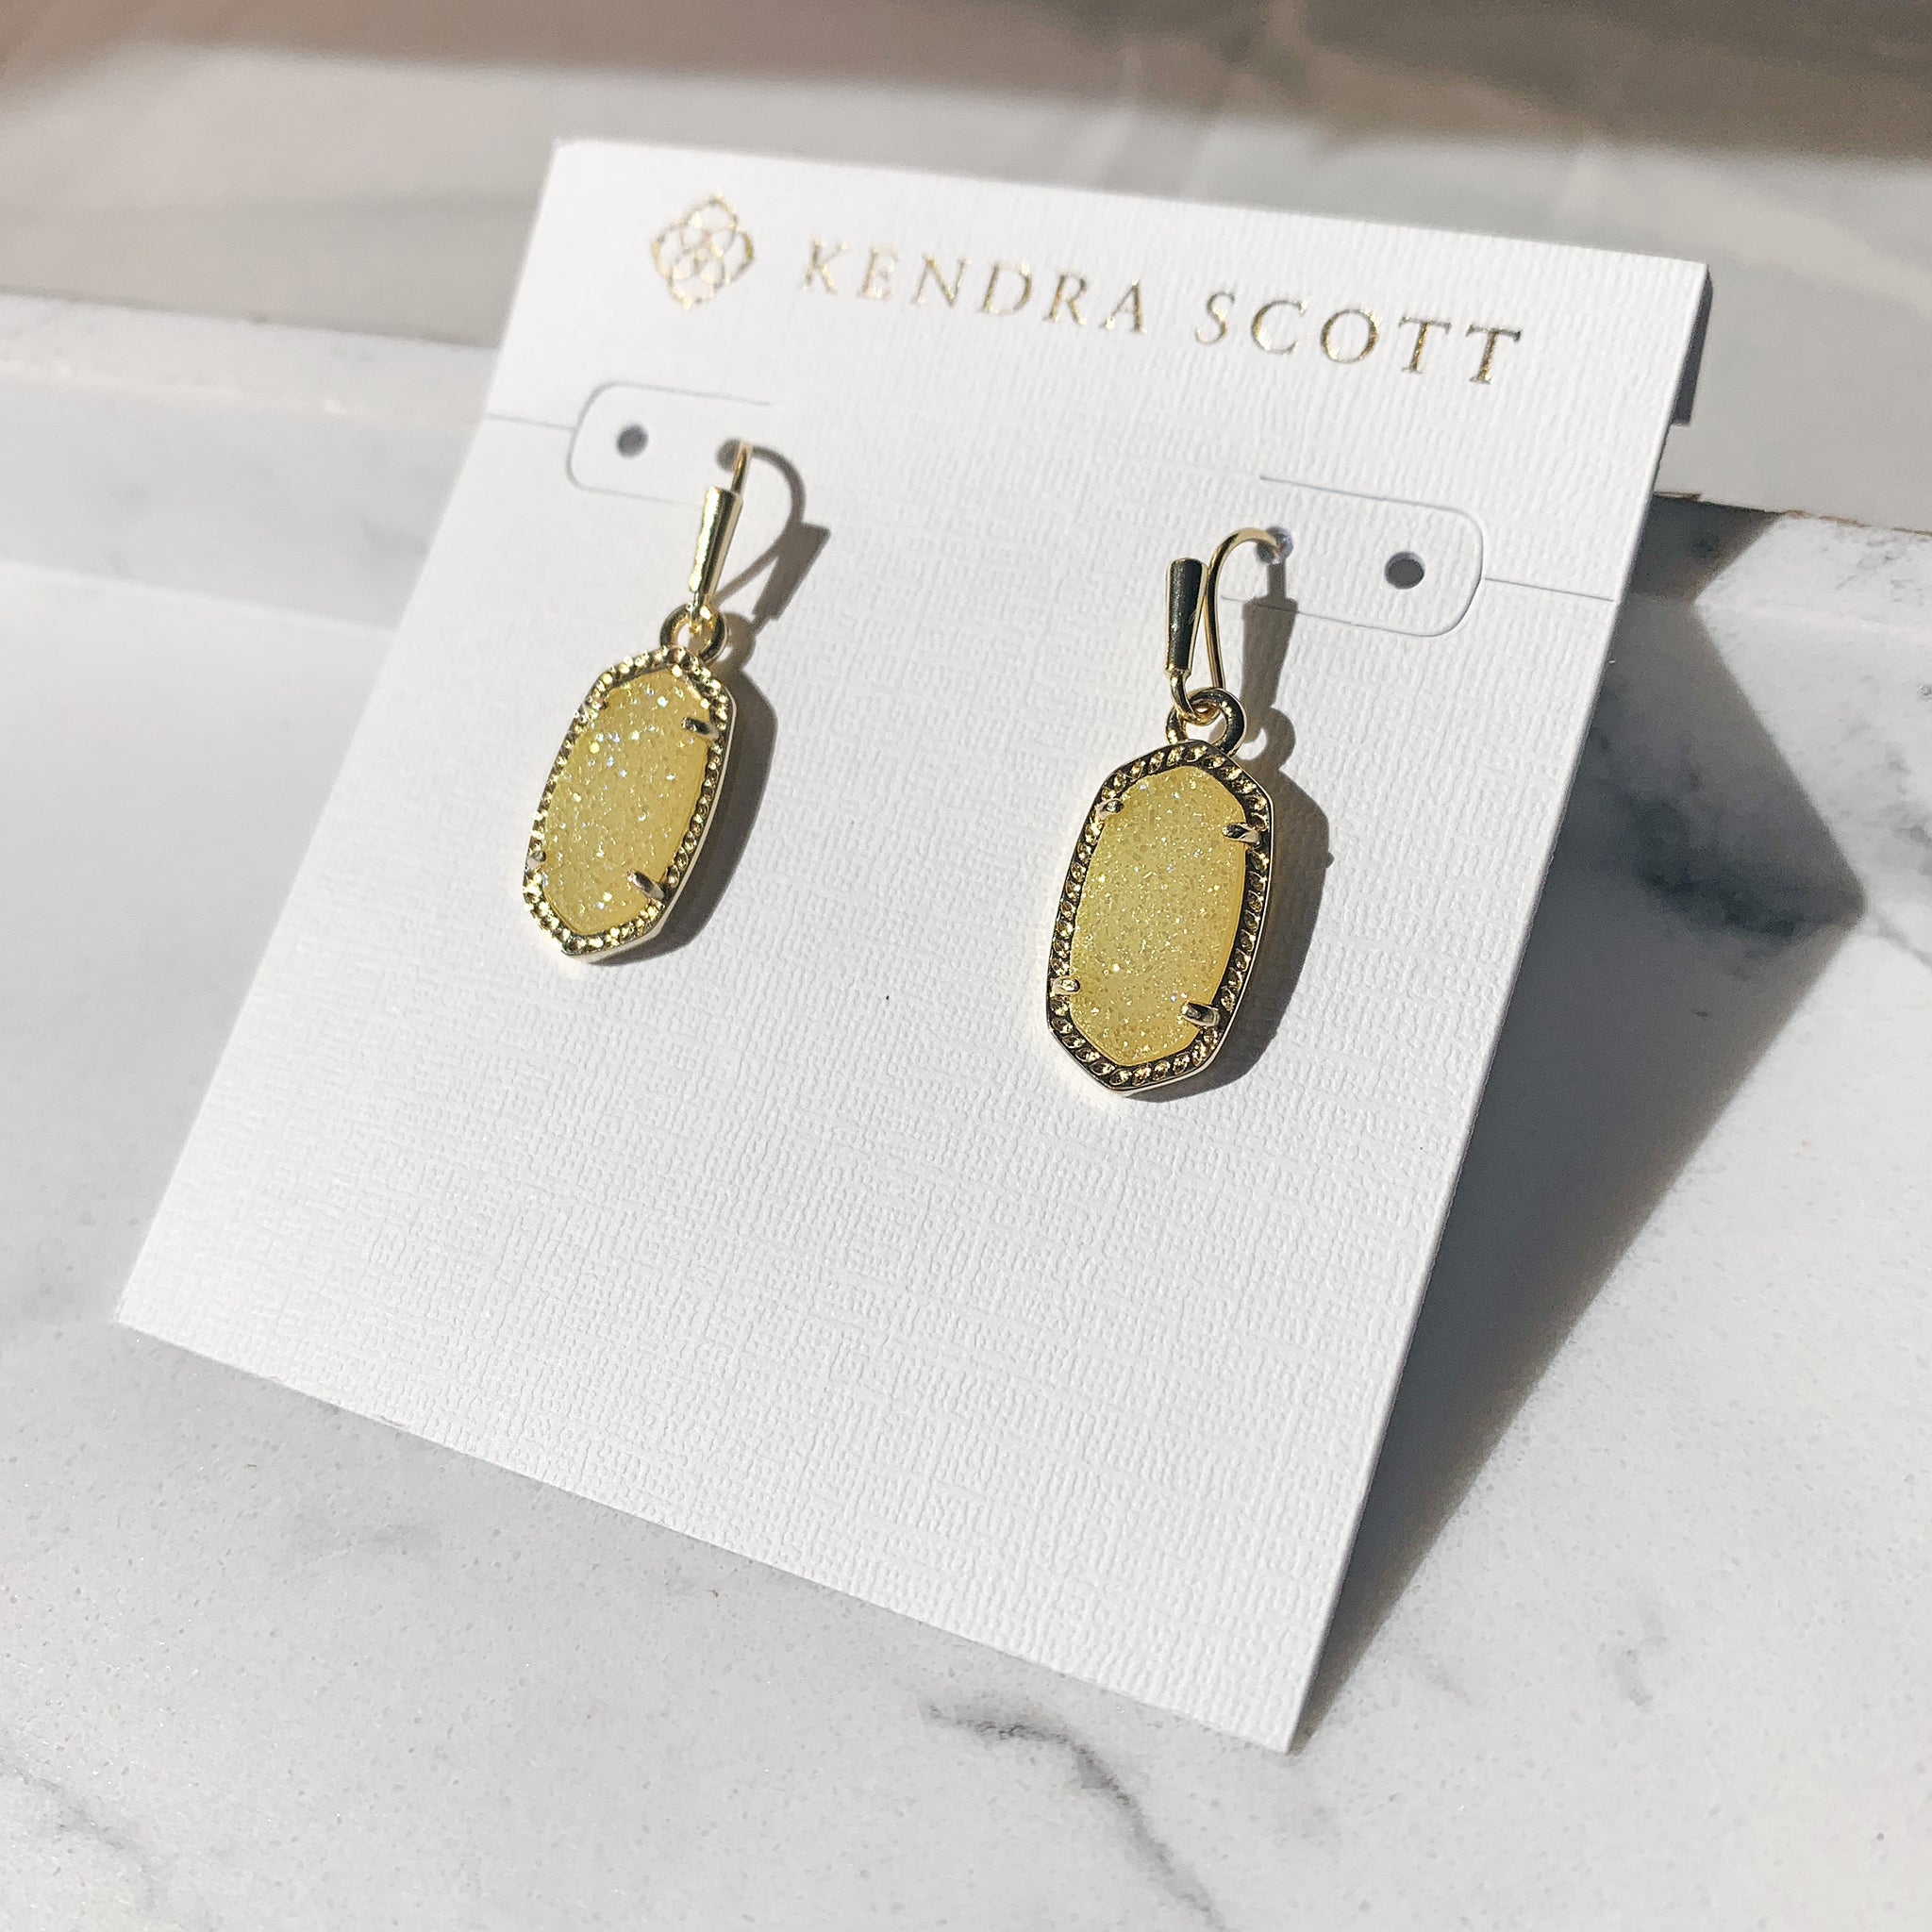 Kendra Scott Lee Oval Dangle Earrings in Light Yellow Drusy and Gold